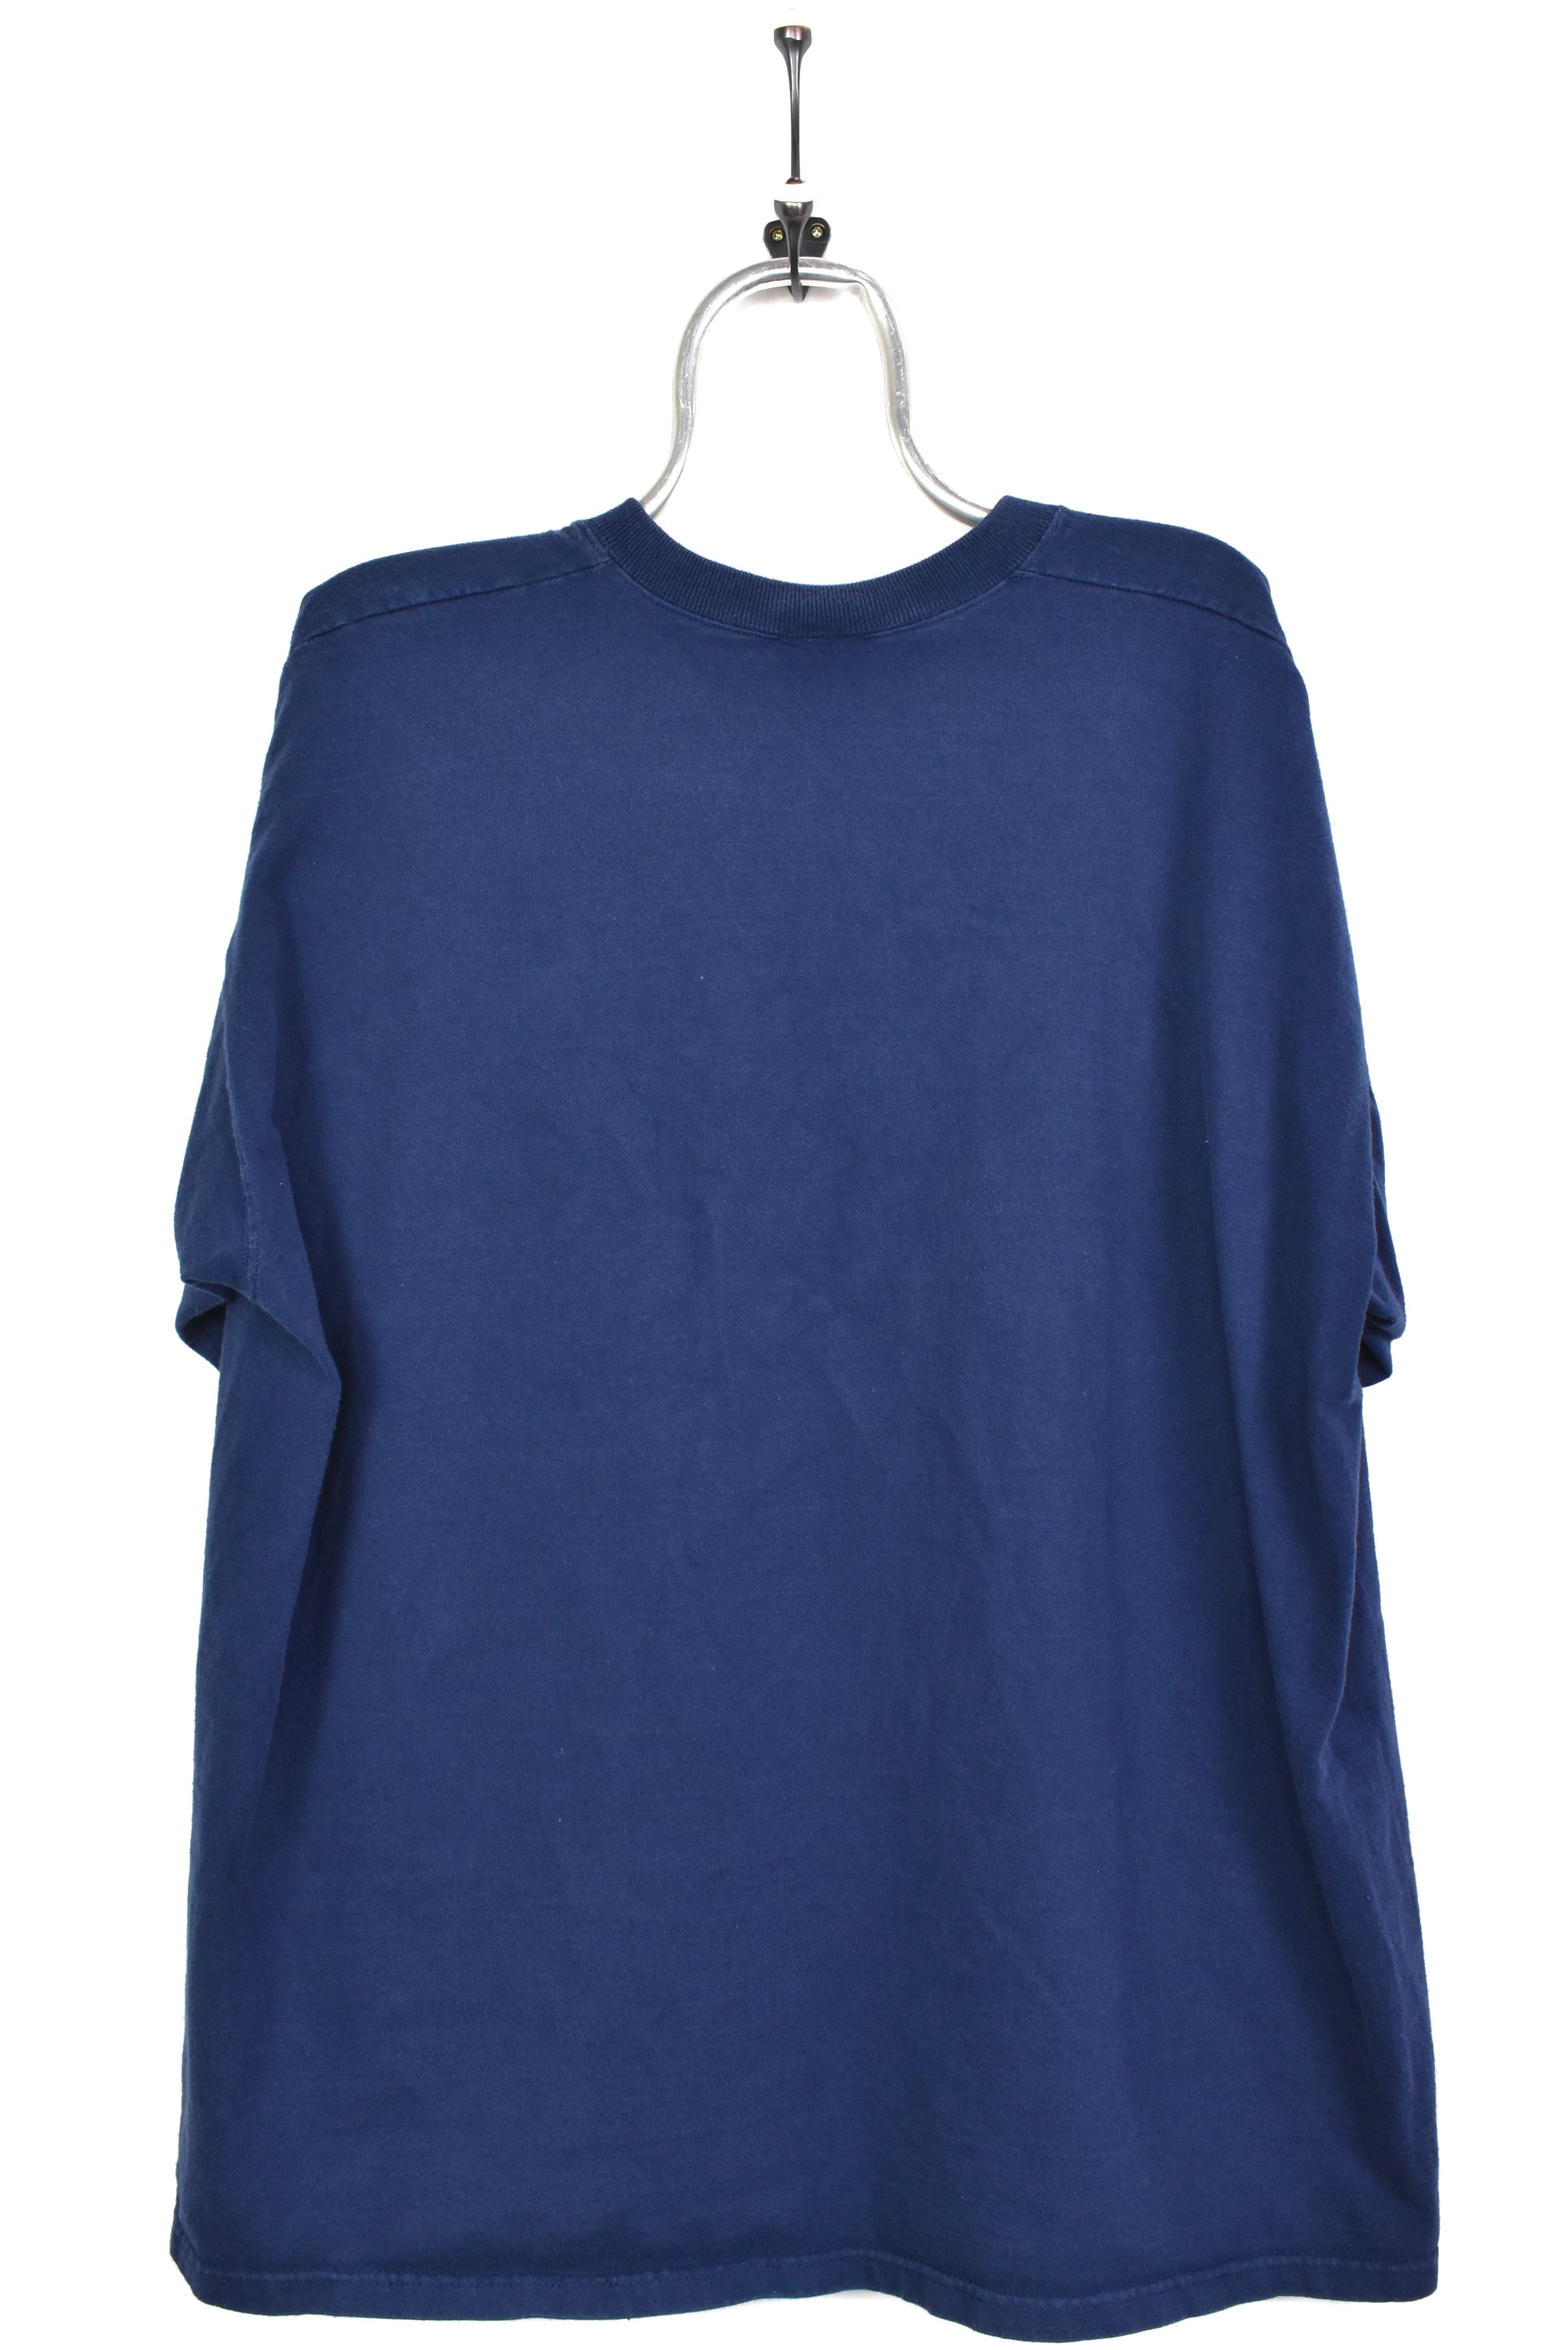 Vintage Wilson shirt, short sleeve embroidered tee - XXL, navy blue WILSON